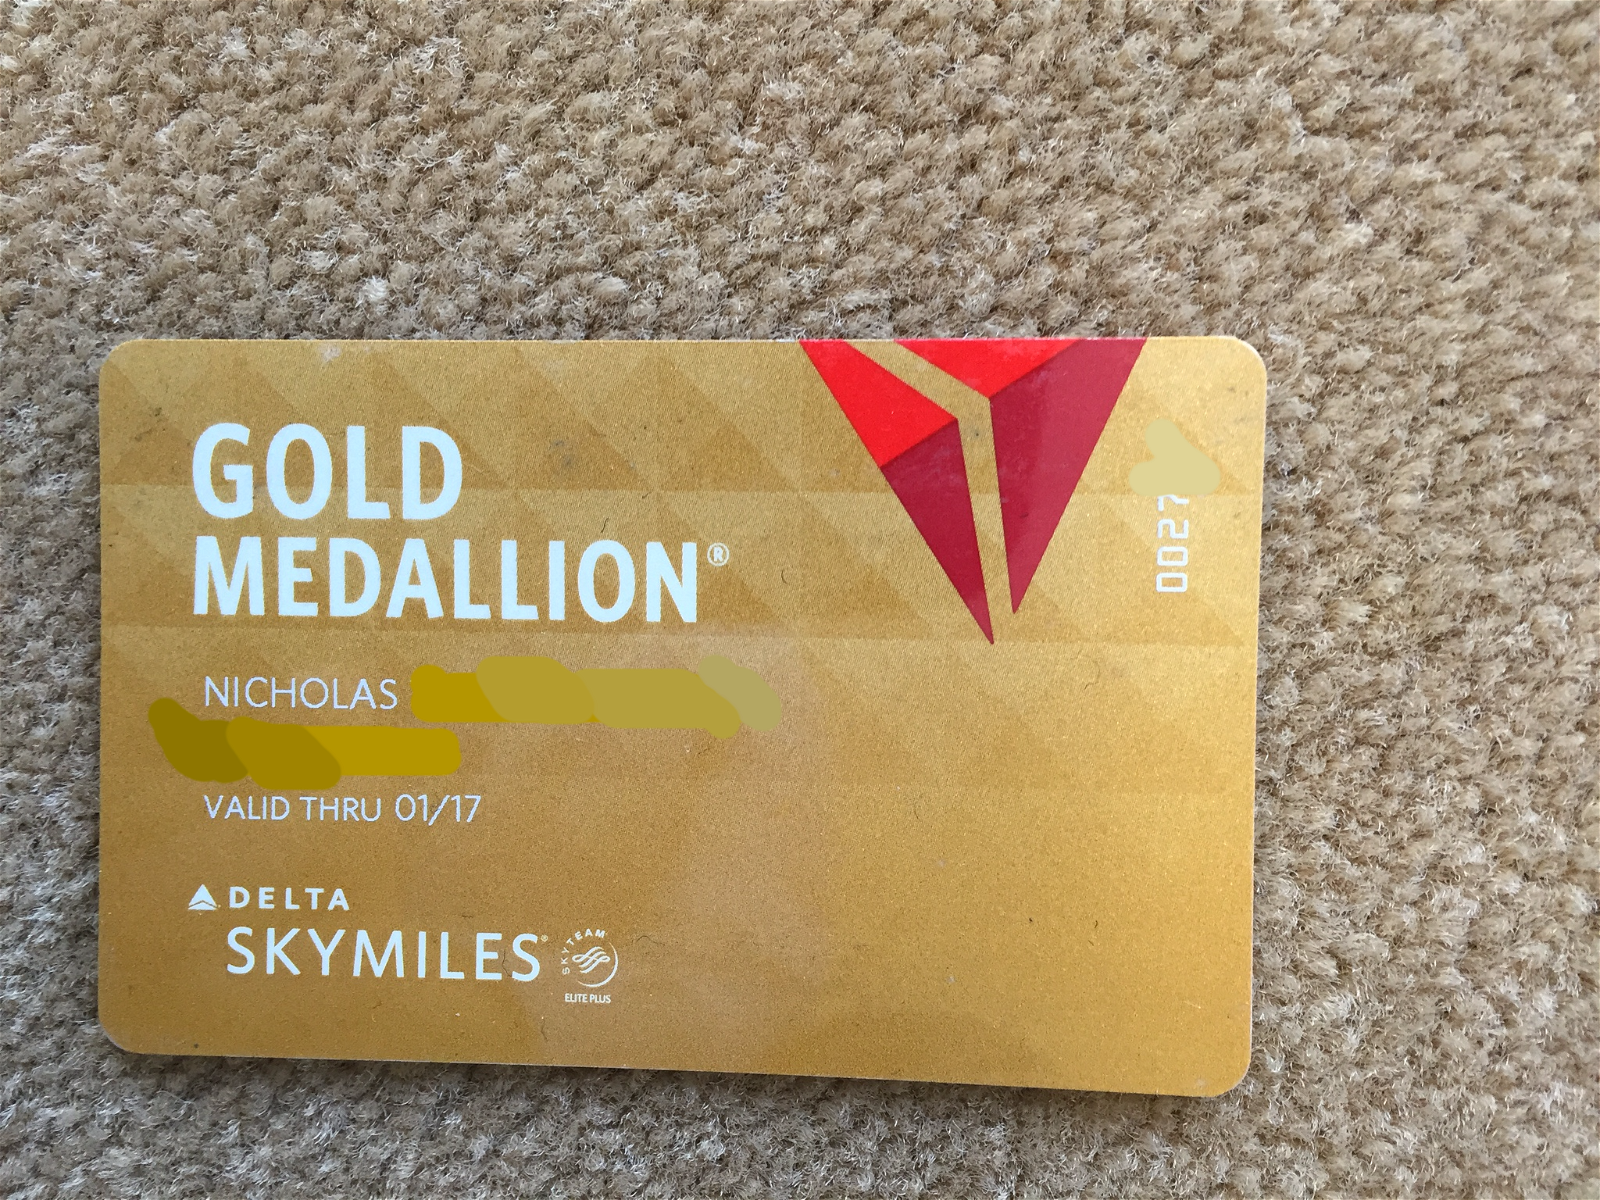 Nick's Gold Medallion credentials on Delta (he's now Platinum...)